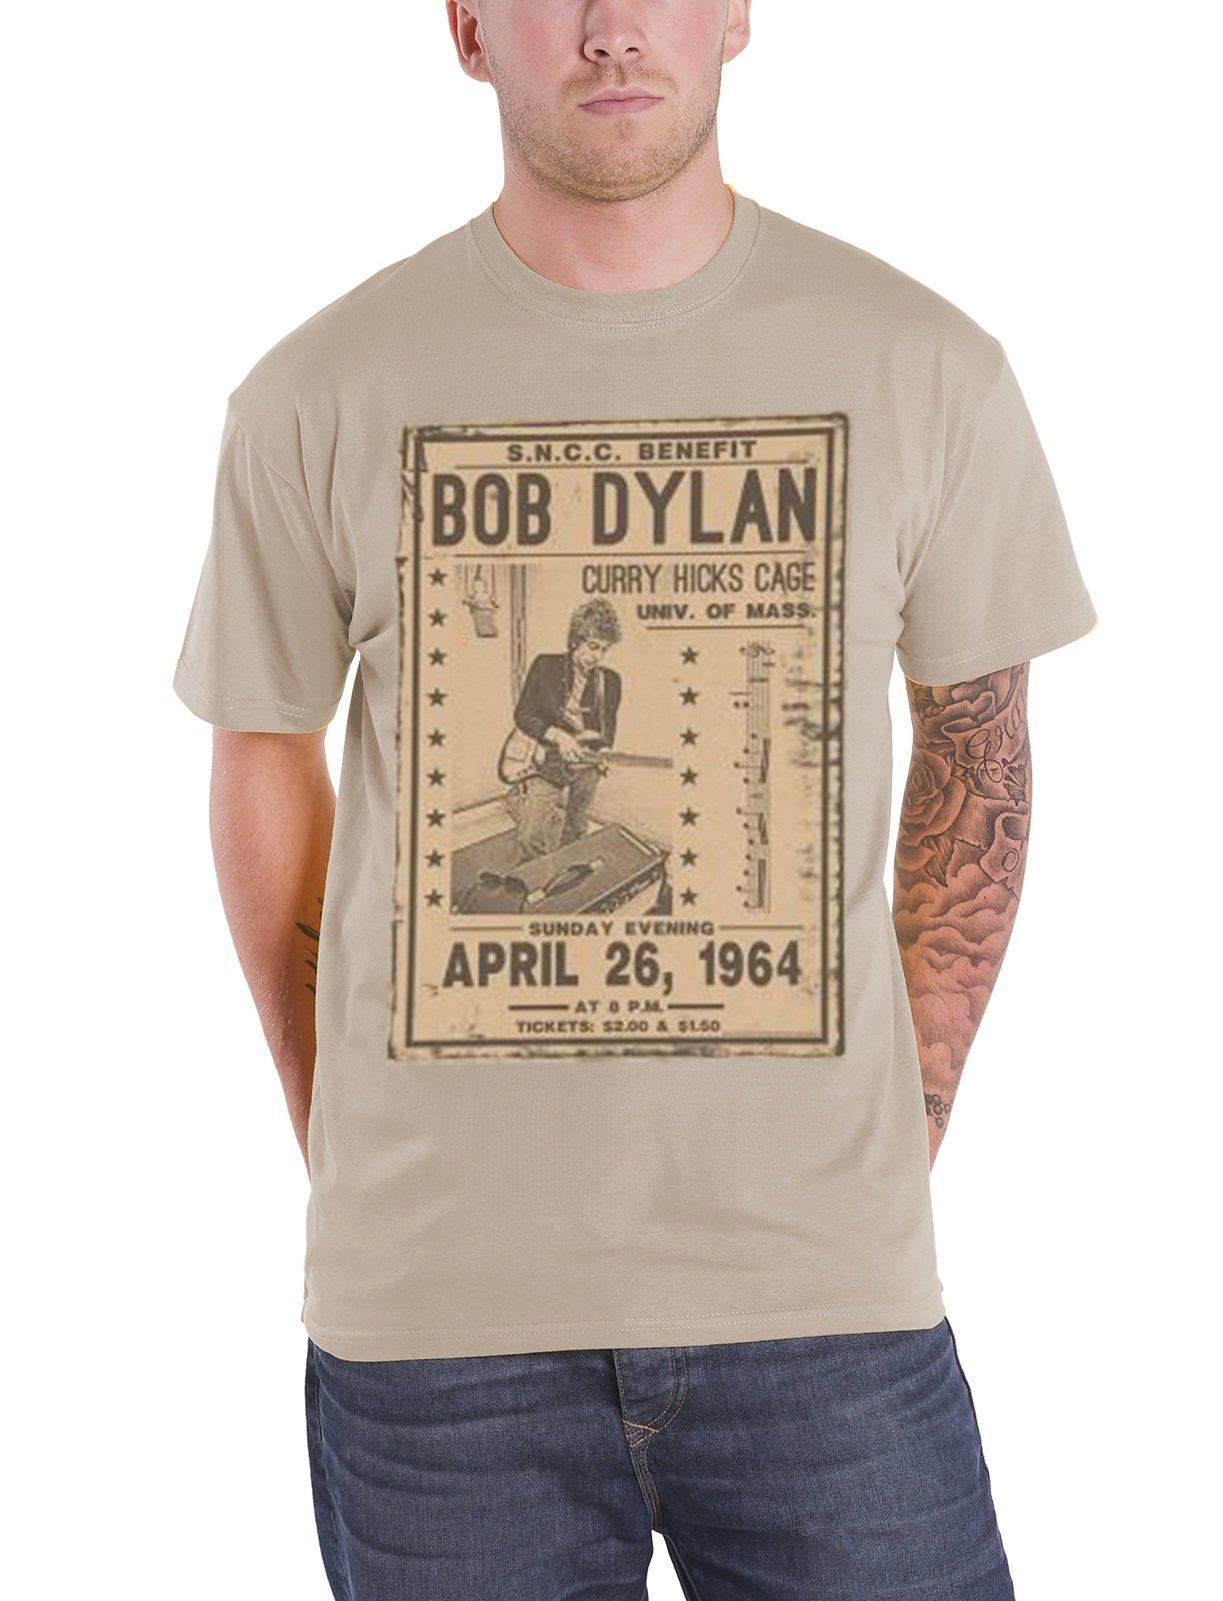 Футболка с флаером Карри Хикс Кейджа, апрель 1964 года Bob Dylan, коричневый bob dylan bob dylan blonde on blonde 2 lp